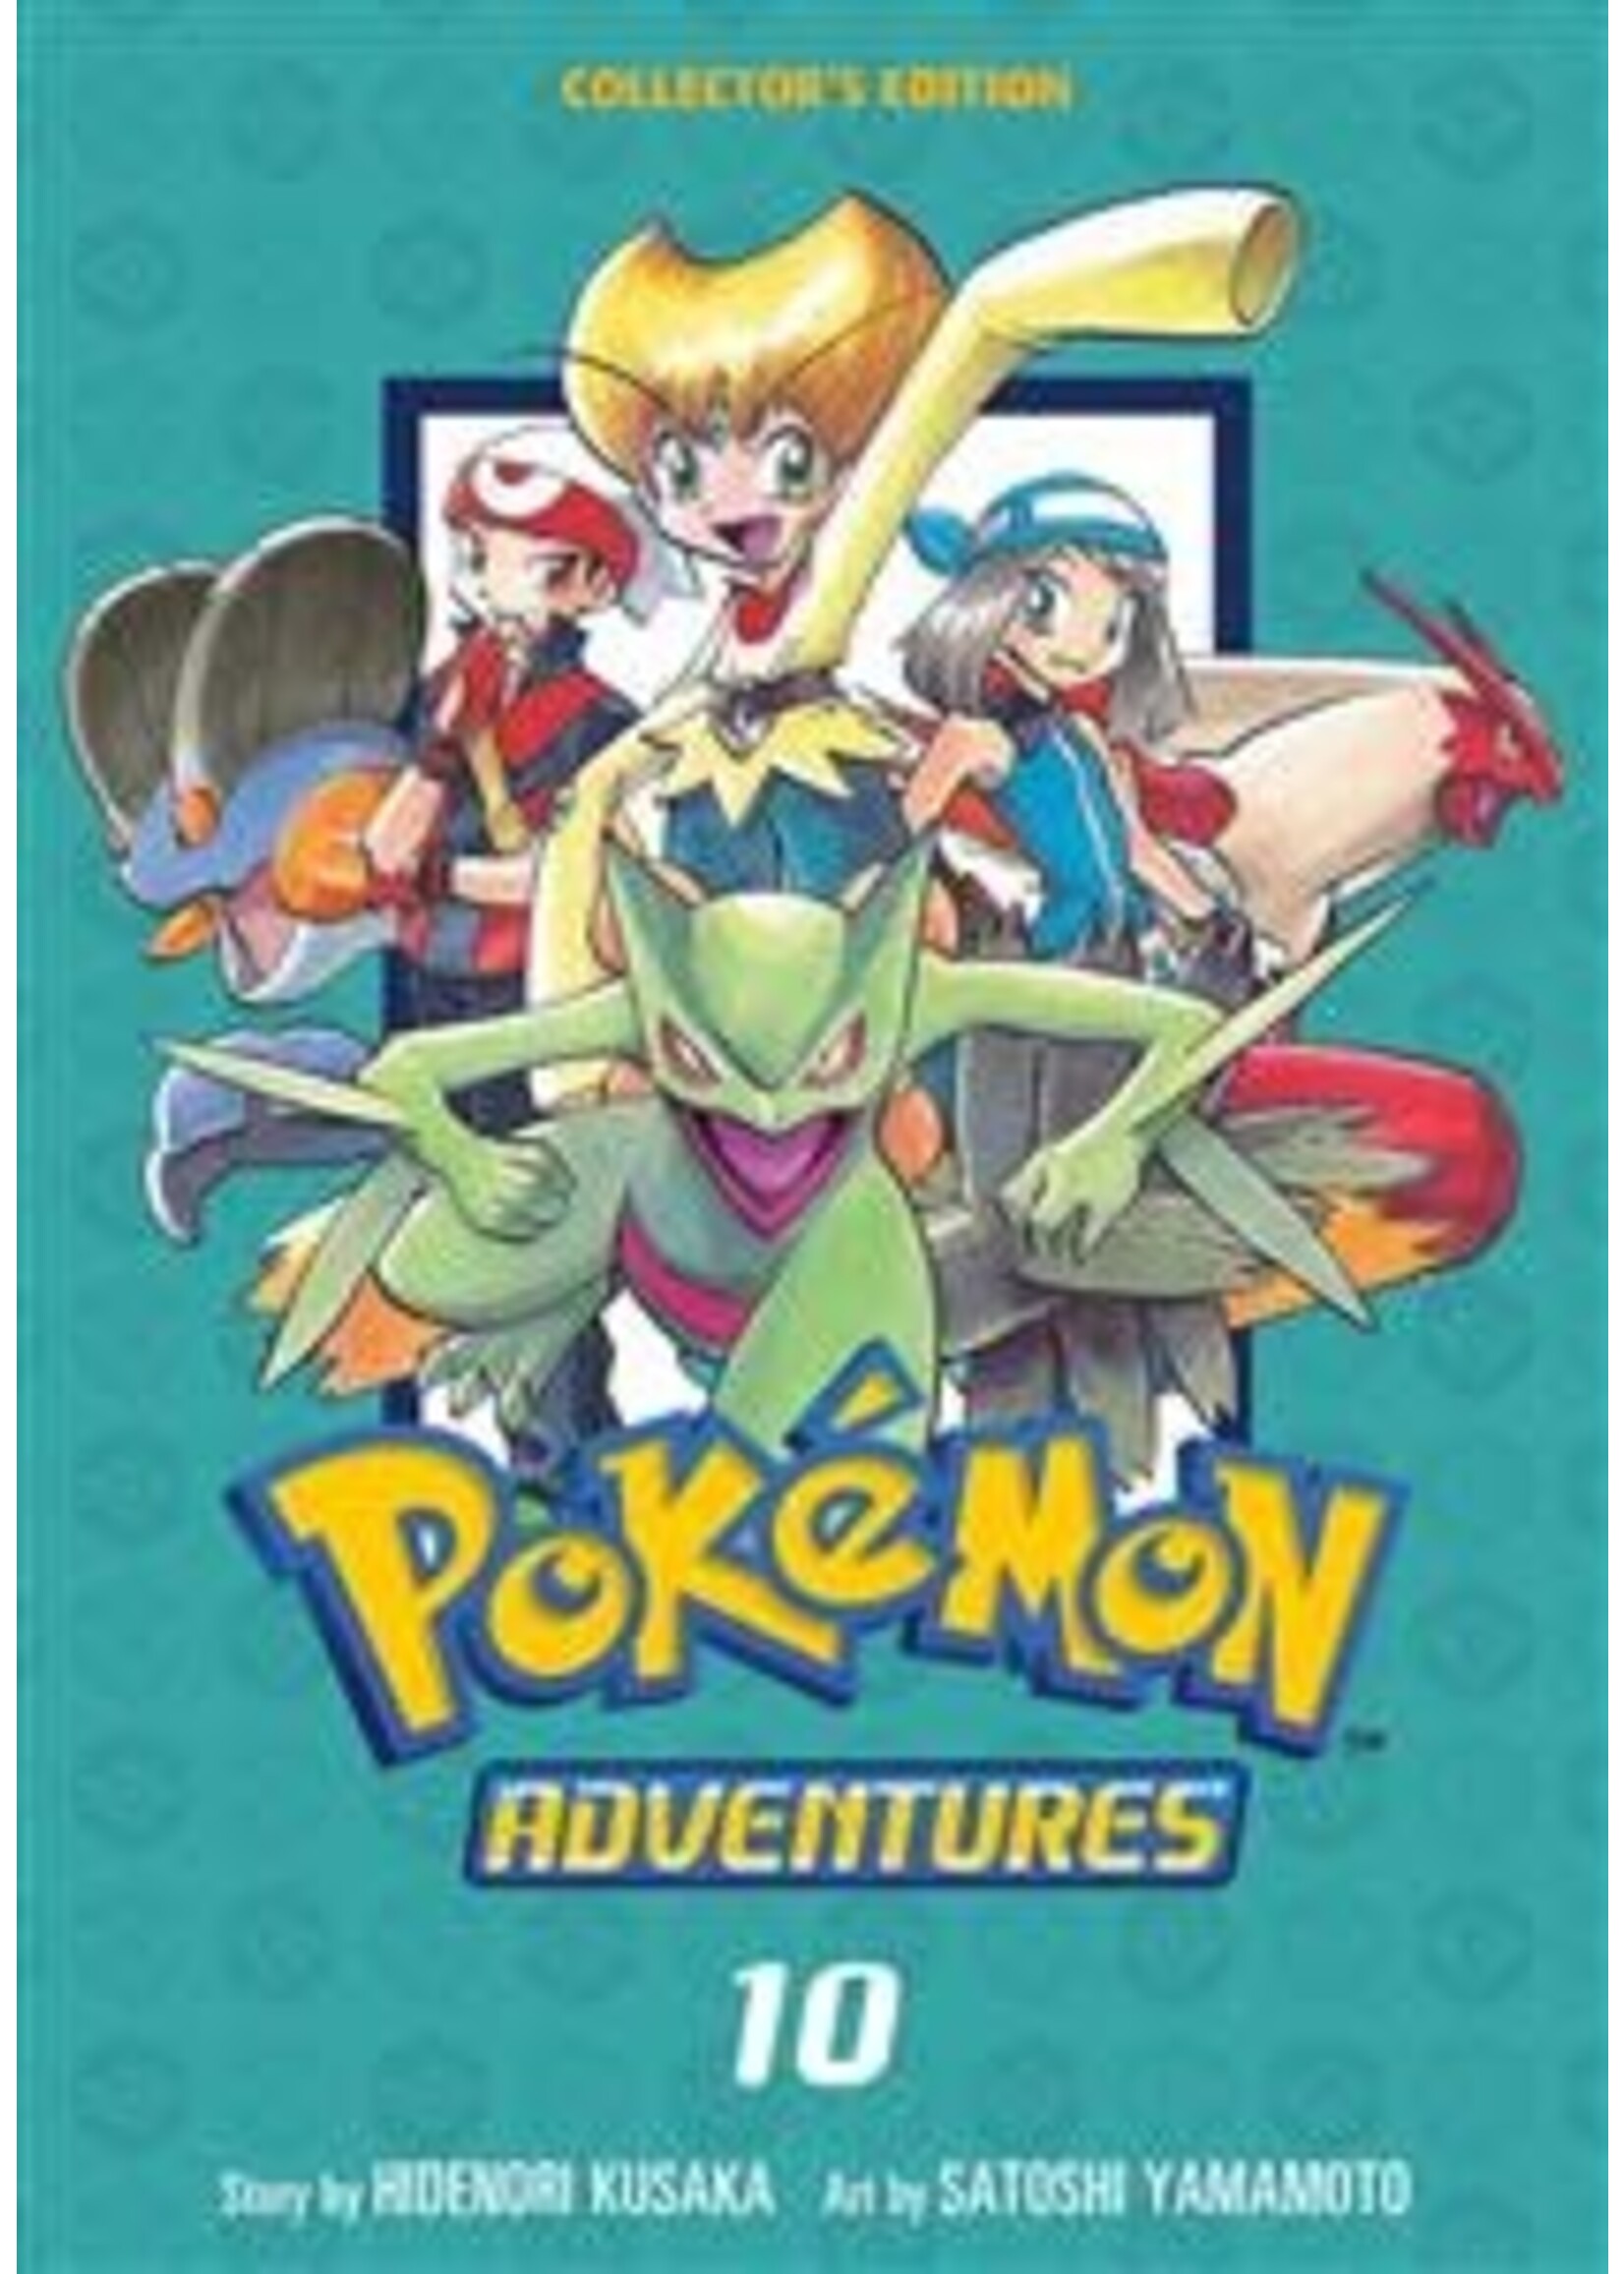 Pokémon Adventures Collector's Edition, Vol. 10 by Hidenori Kusaka, Satoshi Yamamoto